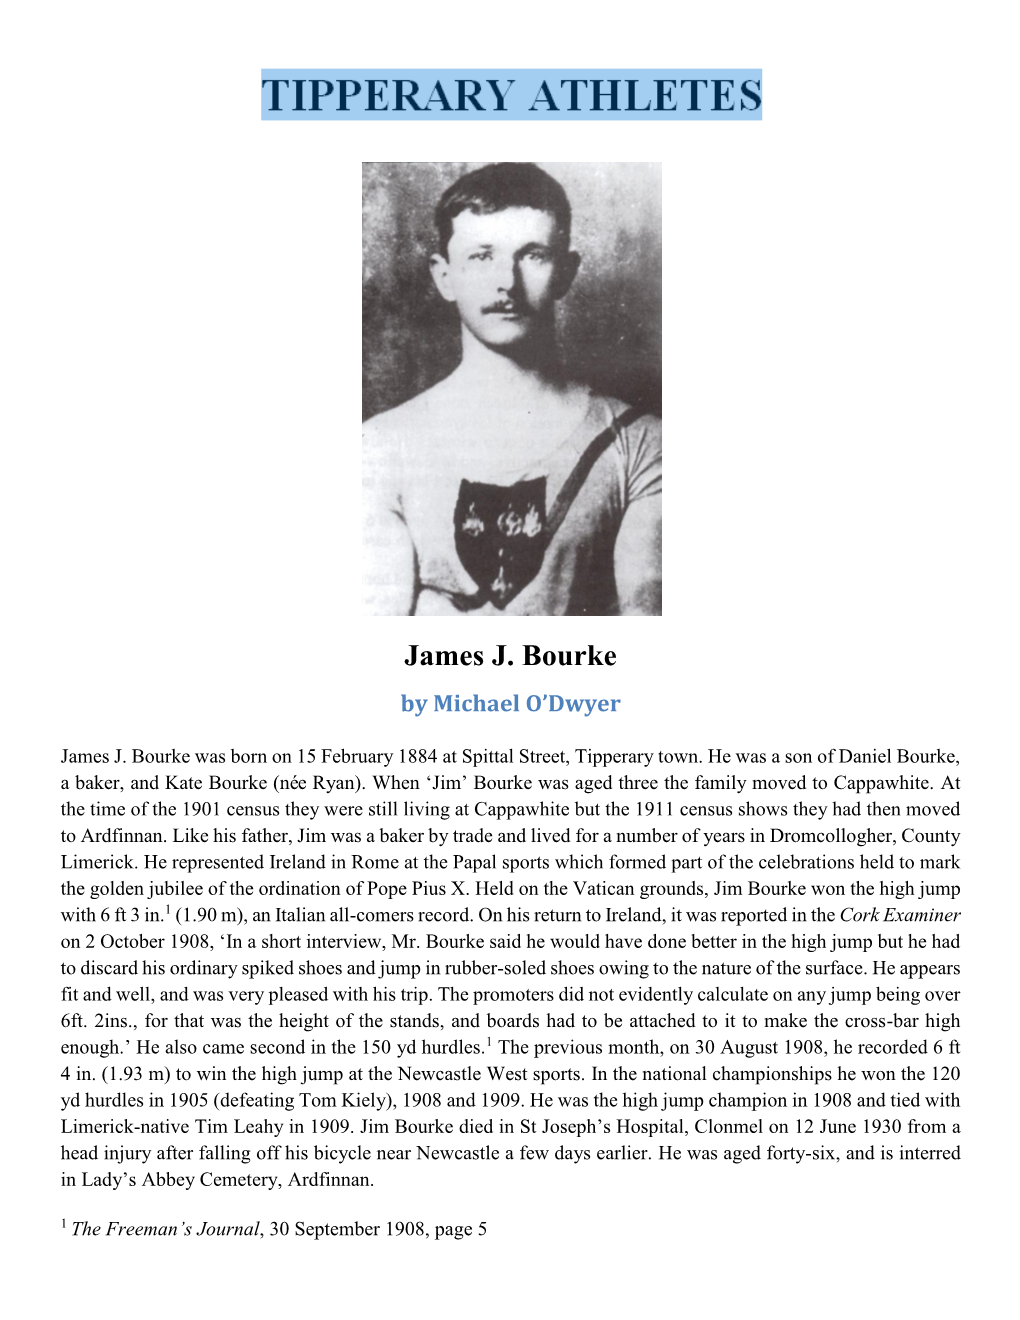 James J. Bourke by Michael O’Dwyer